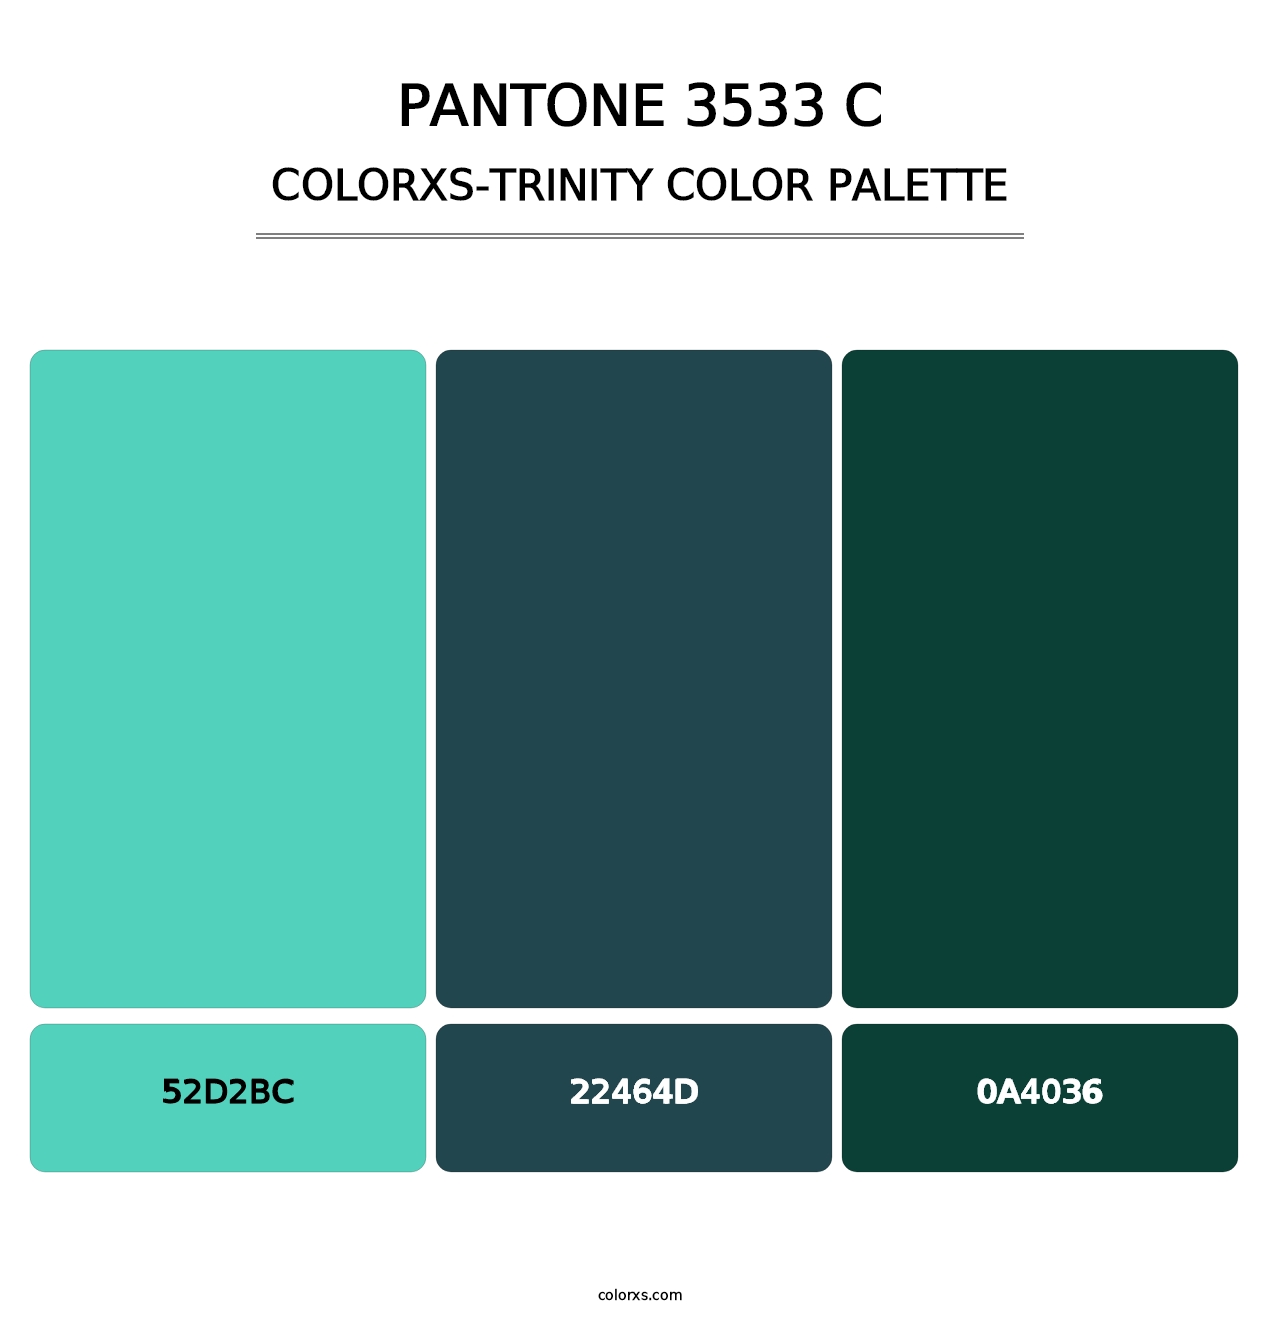 PANTONE 3533 C - Colorxs Trinity Palette